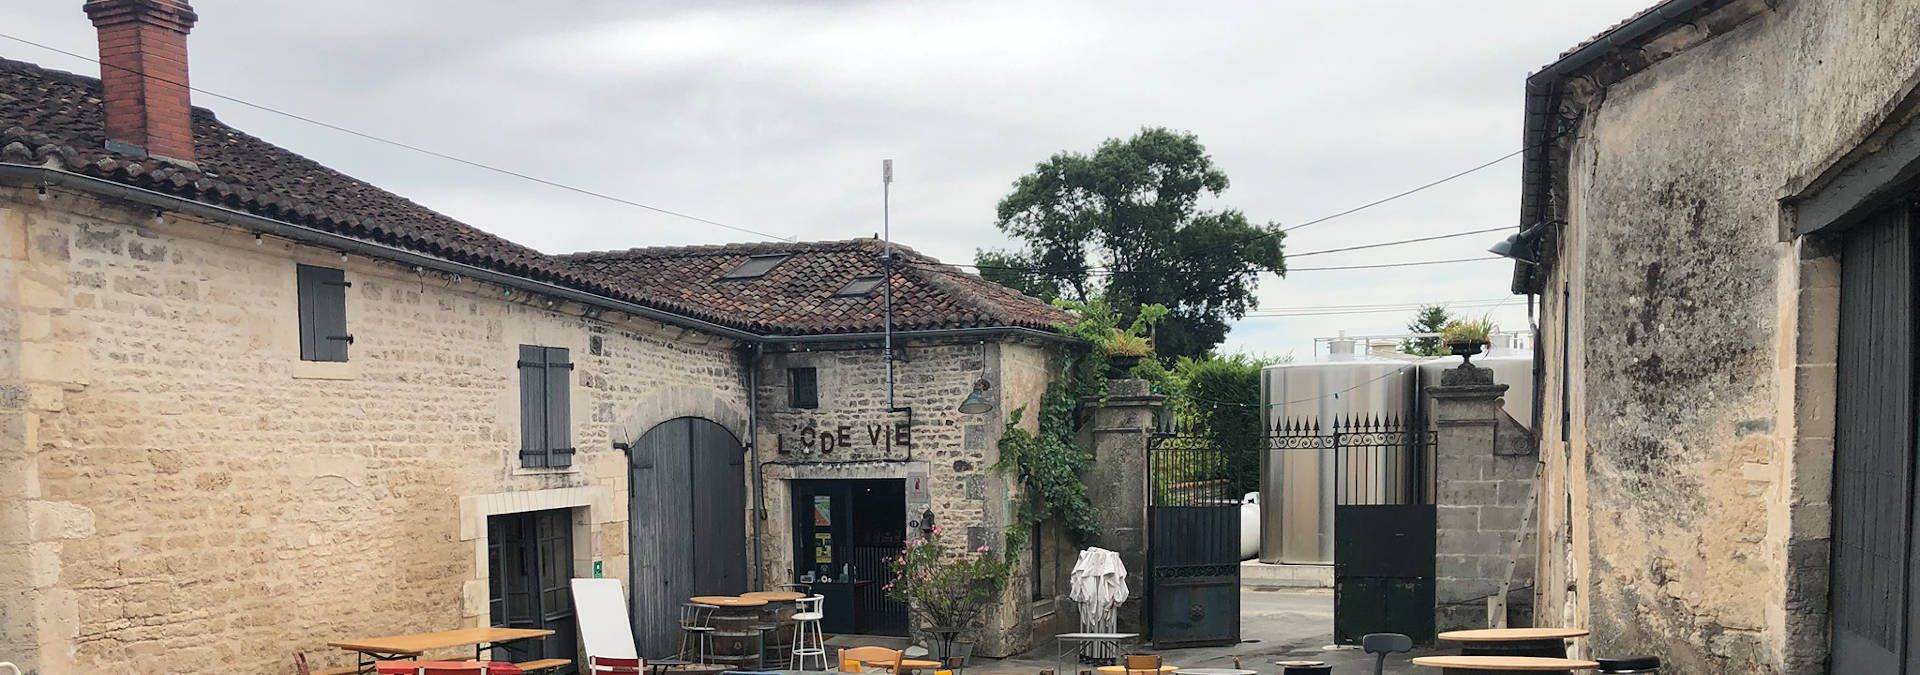 Vineyard Pelletant - Rue des Vignerons